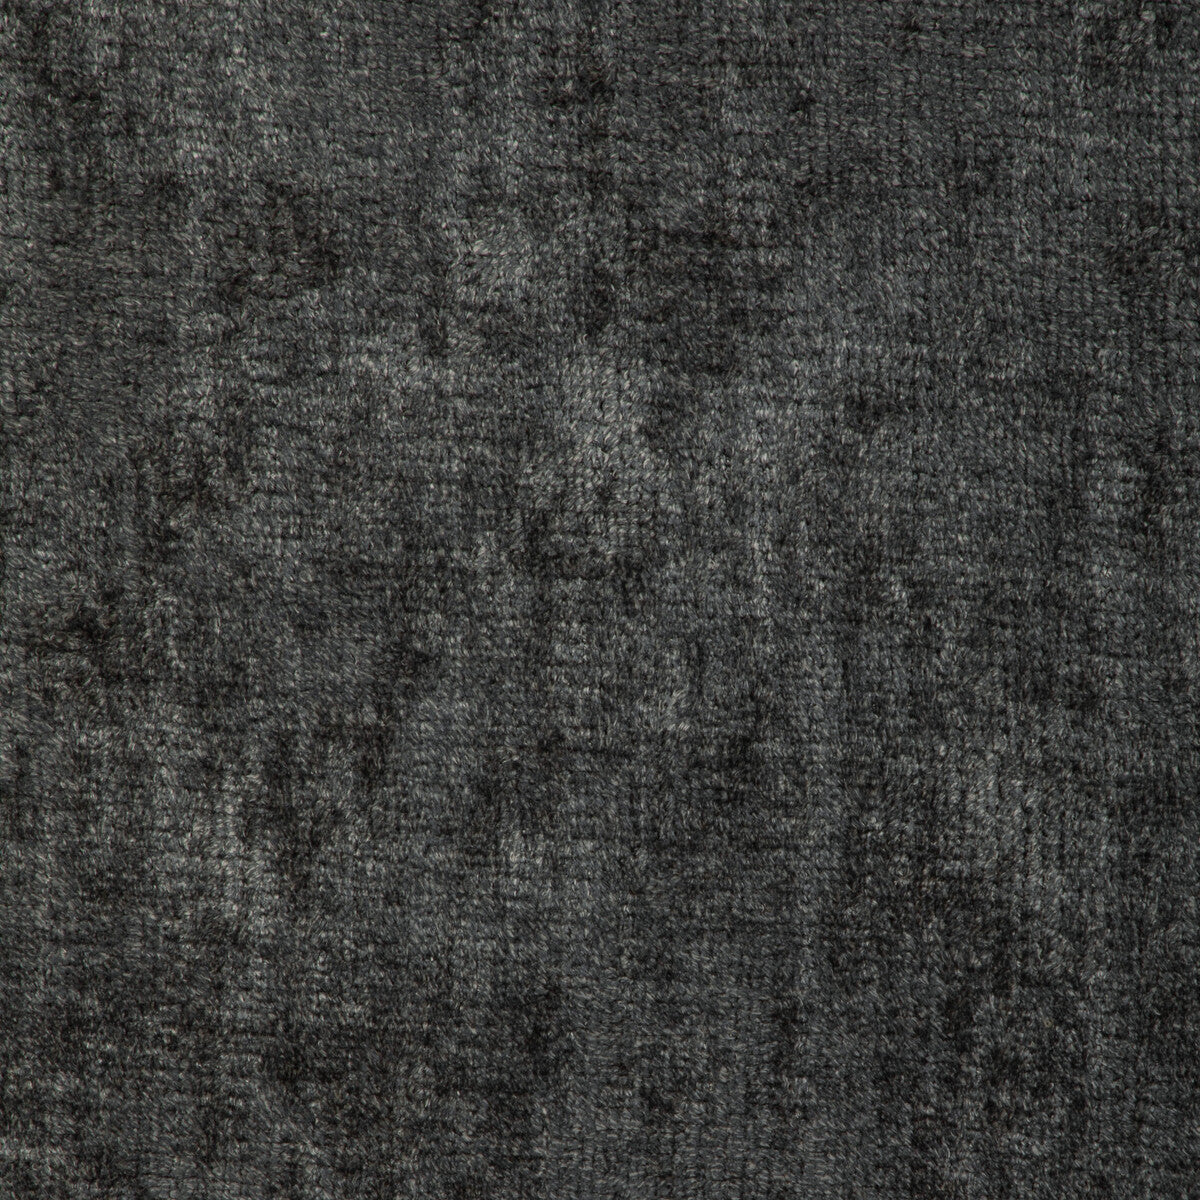 Kravet Smart fabric in 36995-1101 color - pattern 36995.1101.0 - by Kravet Smart